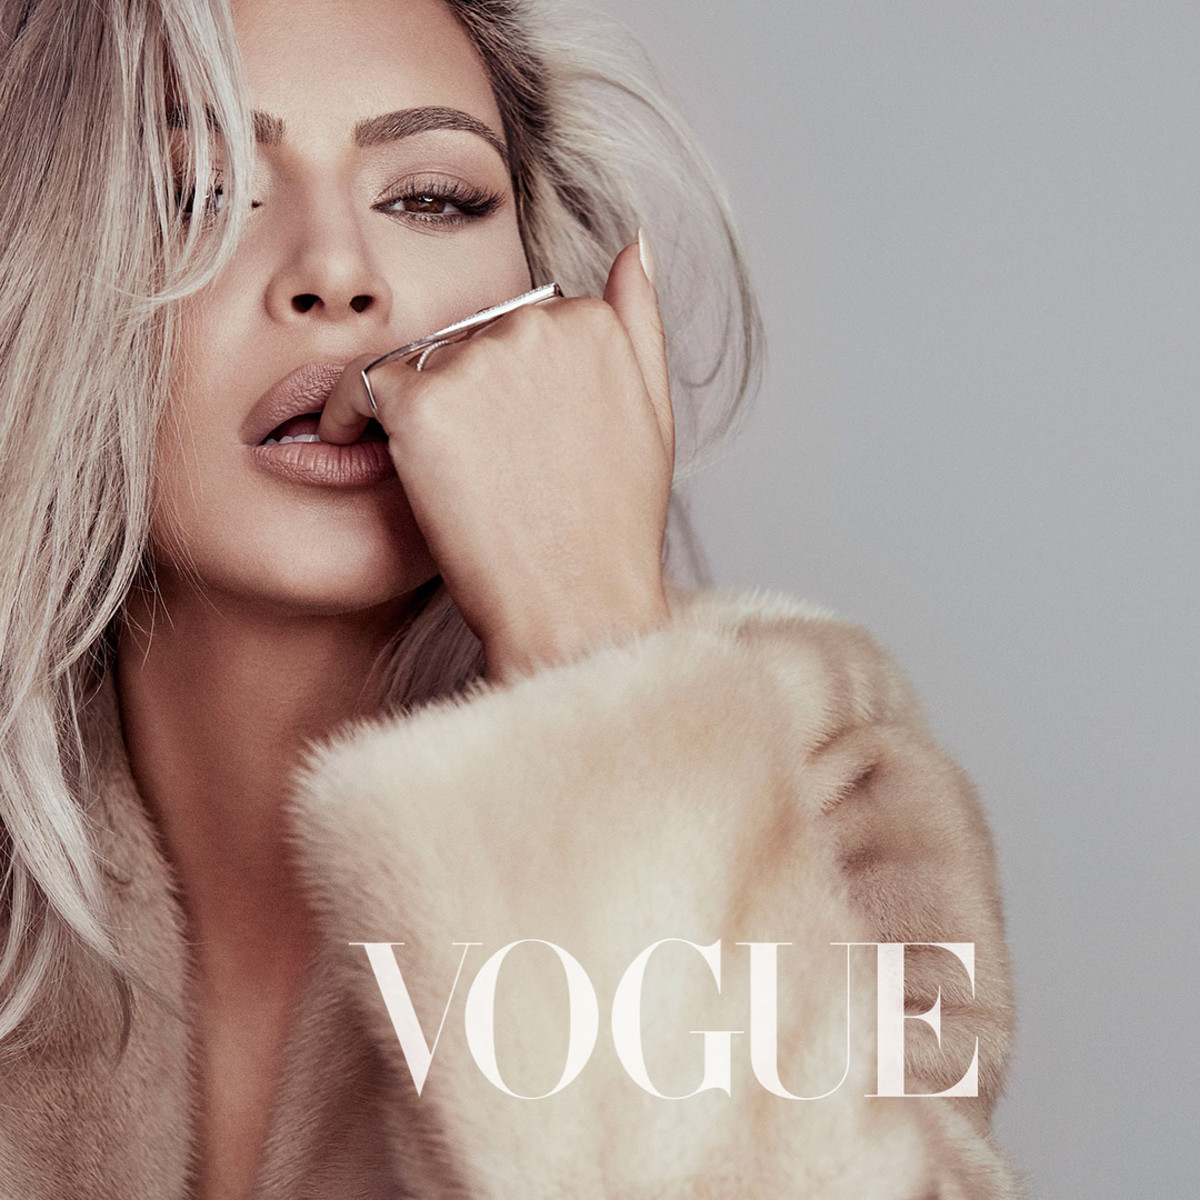 Kim Kardashian West on the cover of "Vogue" Taiwan. Photo: @voguetaiwan/Instagram